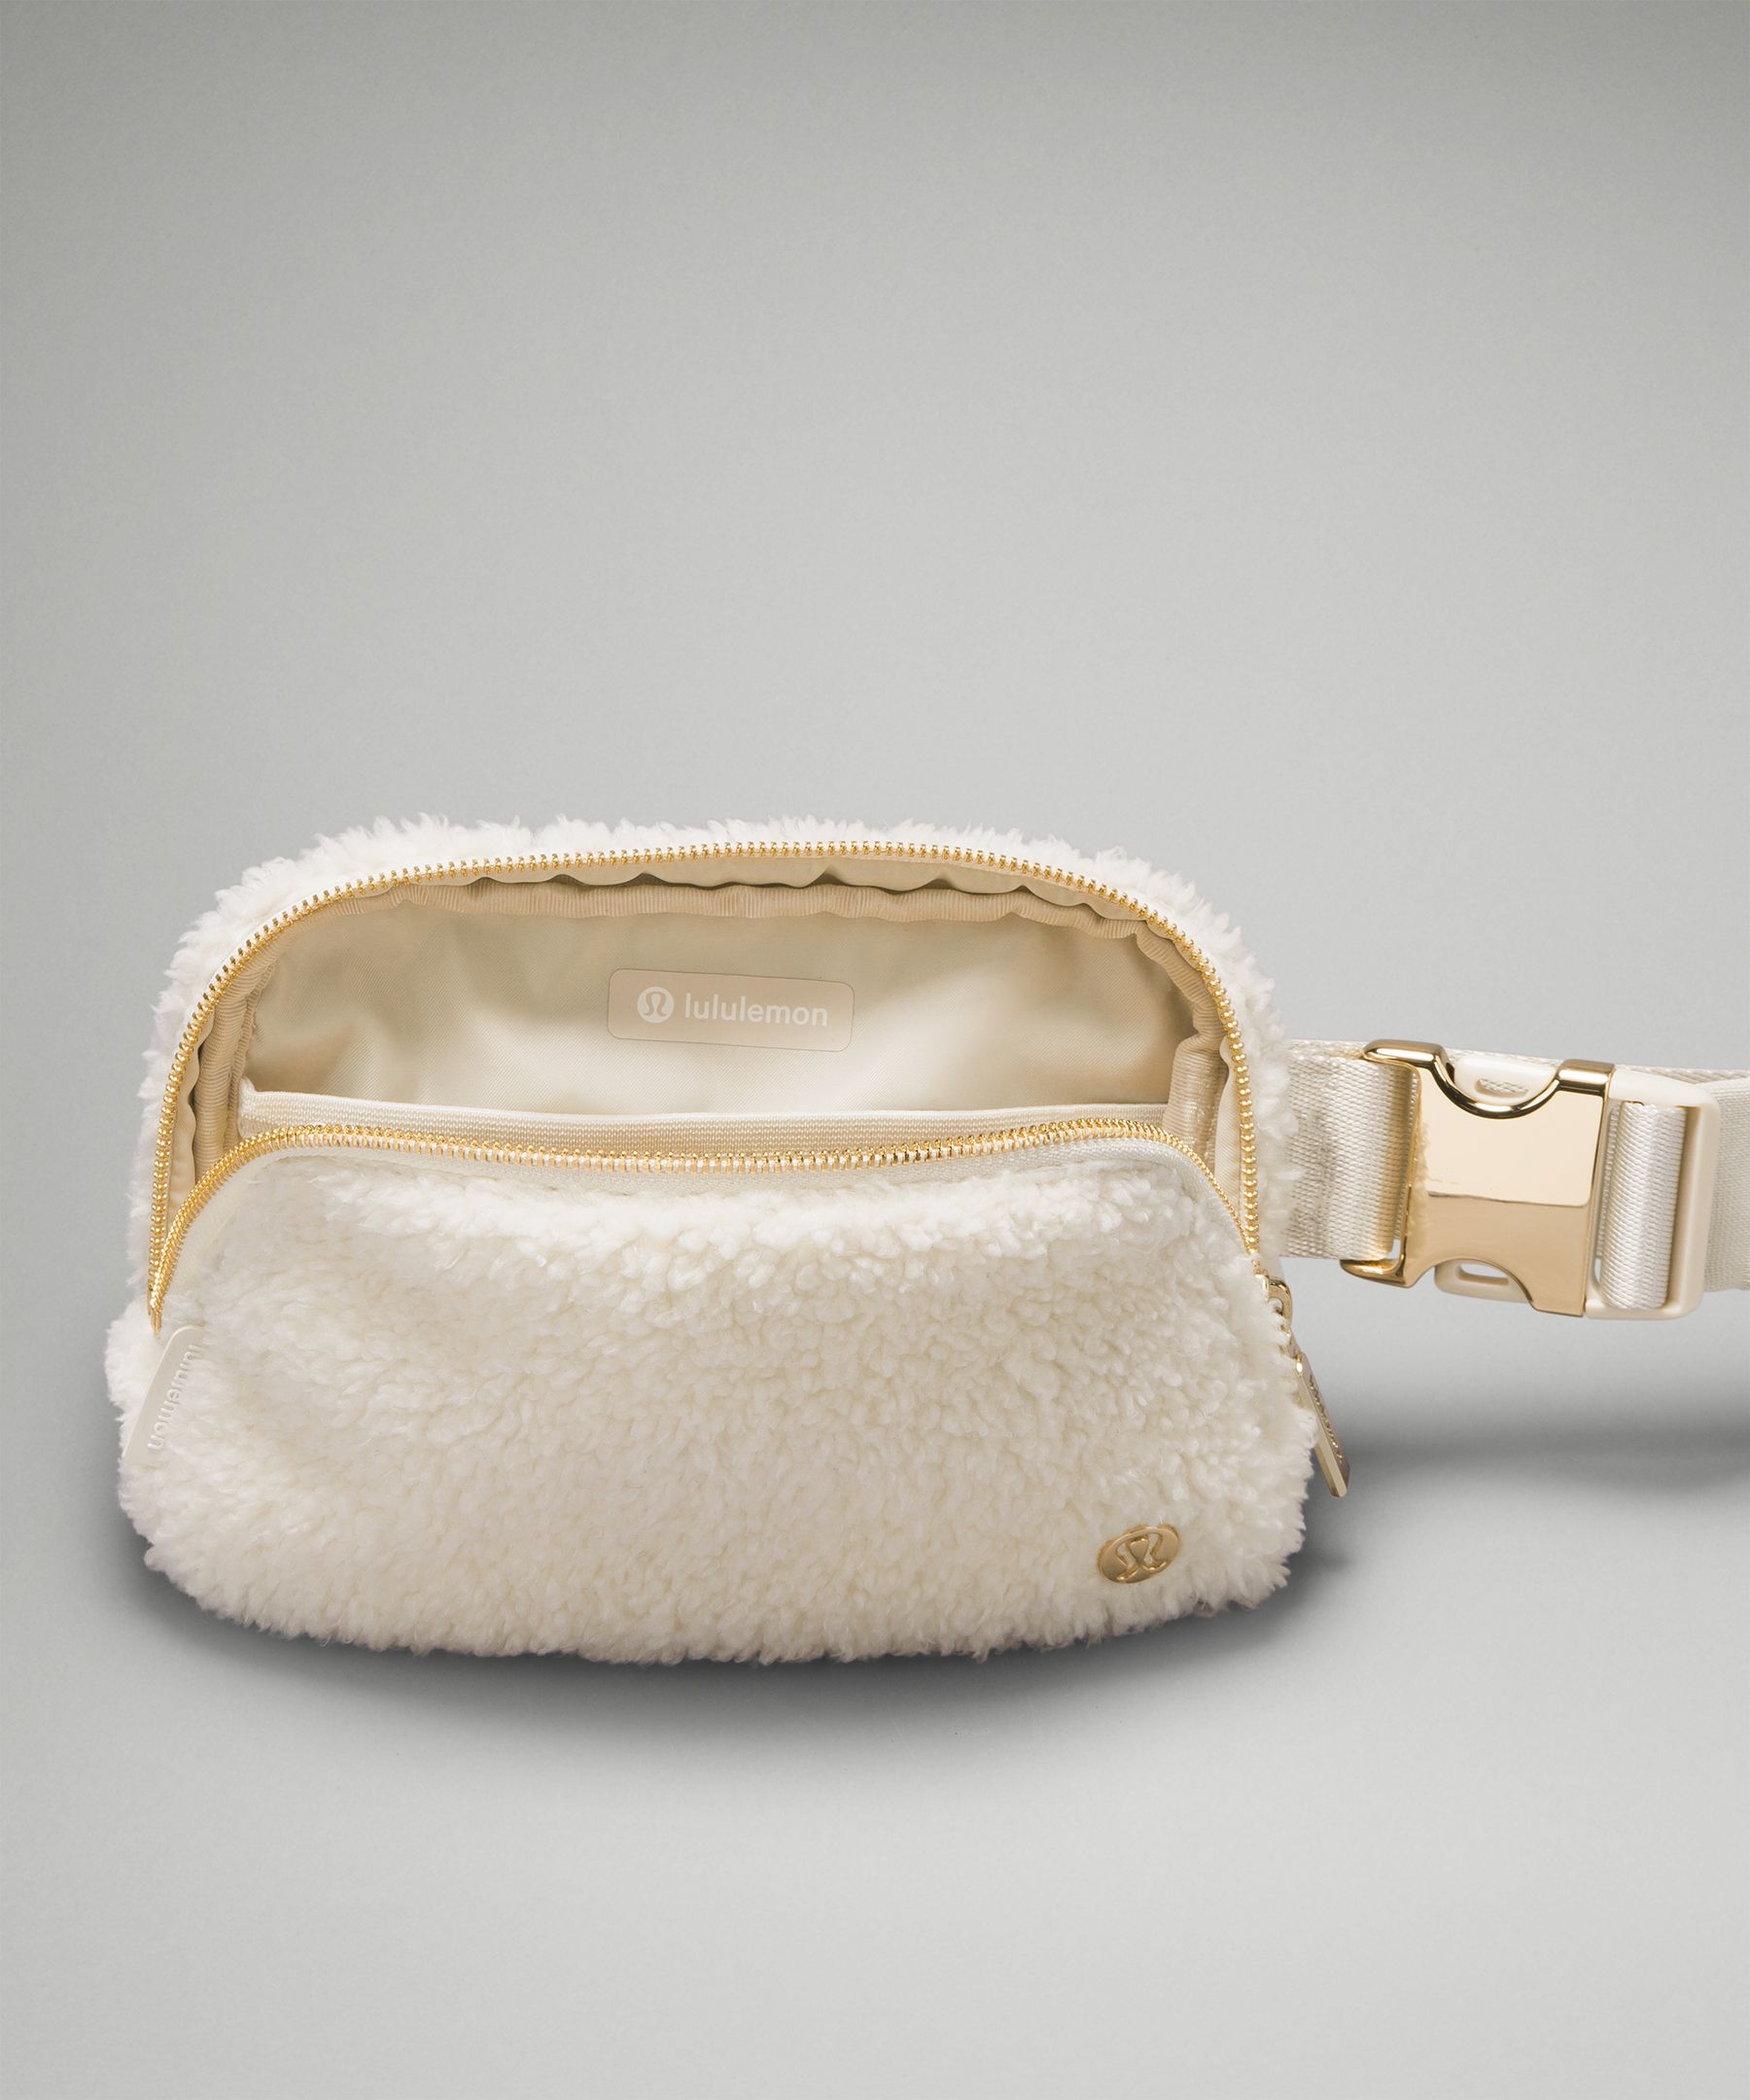 New Lulu bag alert 🚨 #beltbag #plussizeedition #curvy #aeriereal #rev